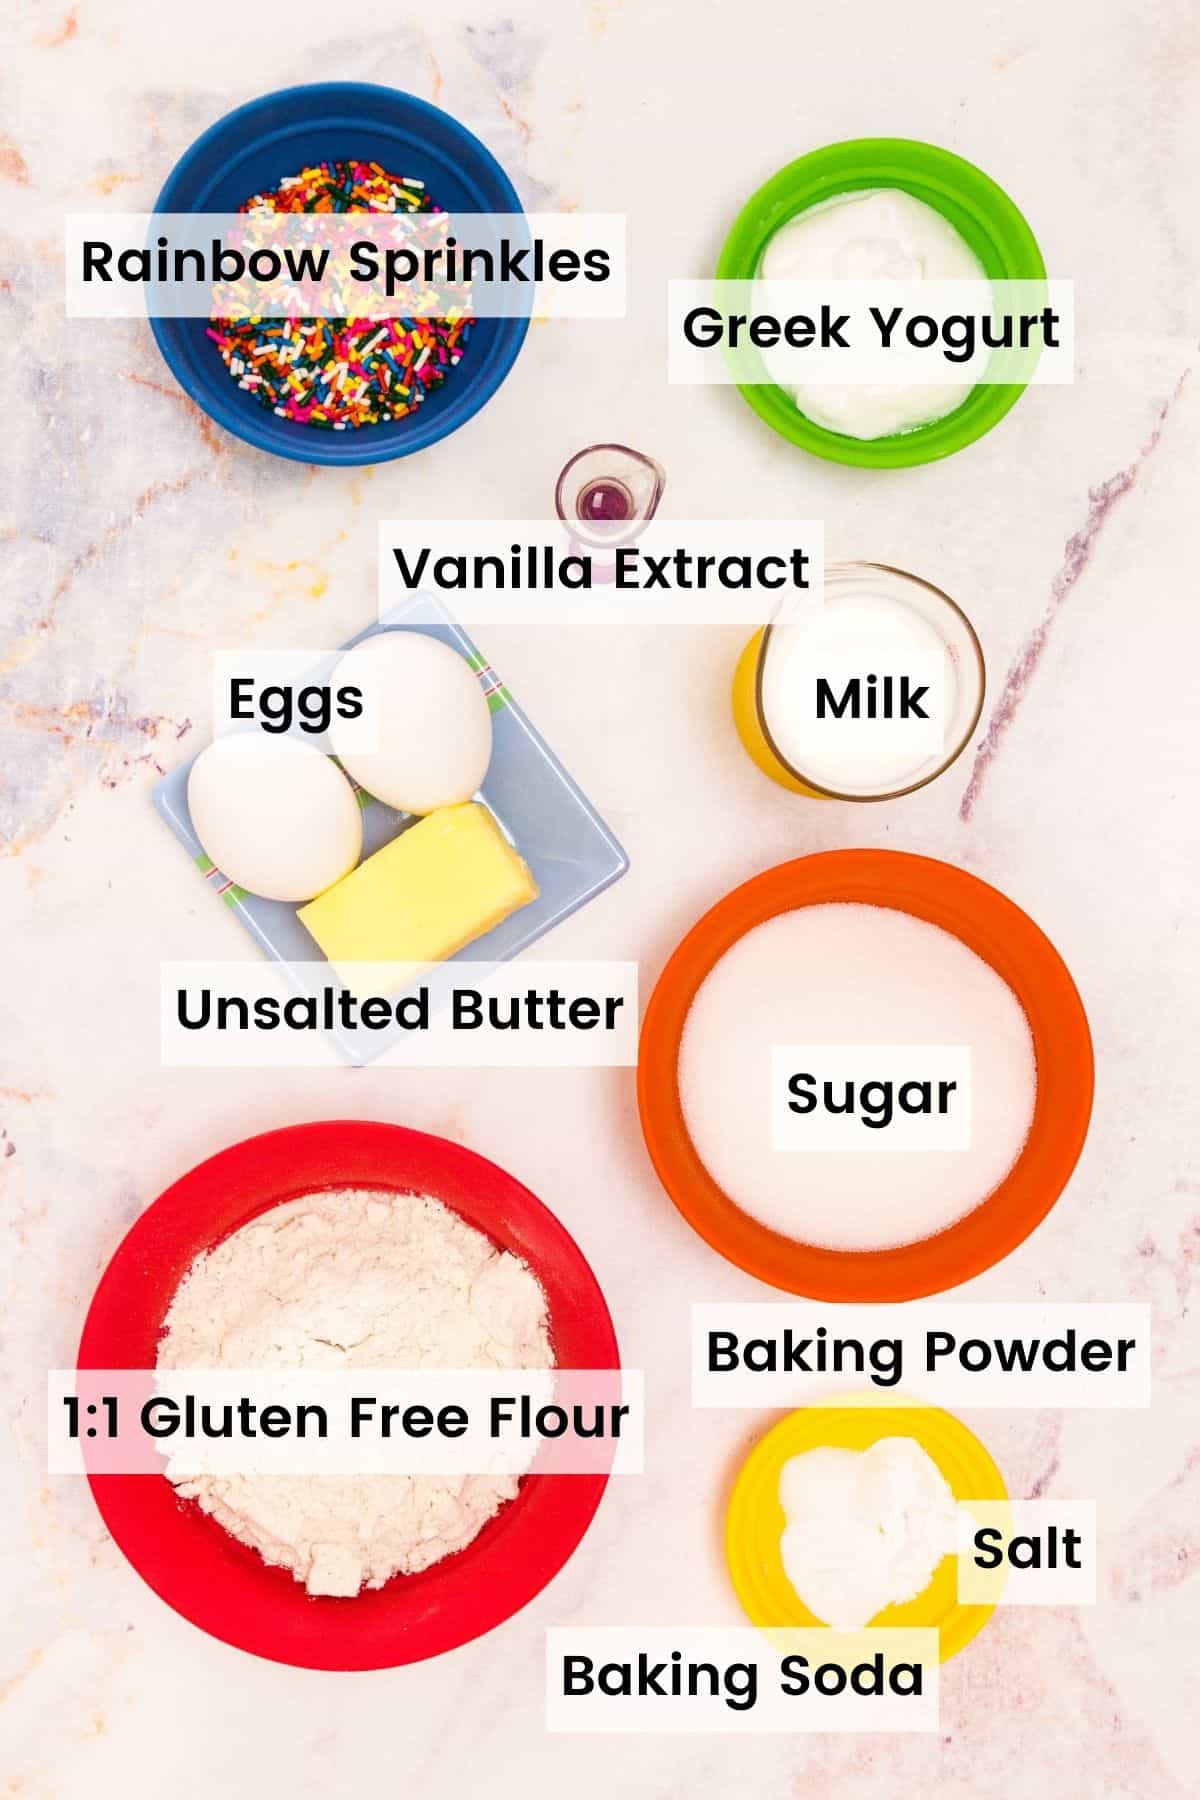 The ingredients for funfetti cupcakes are shown: gluten free flour, sugar, eggs, butter, baking powder and baking soda, salt, vanilla, buttermilk, rainbow sprinkles.